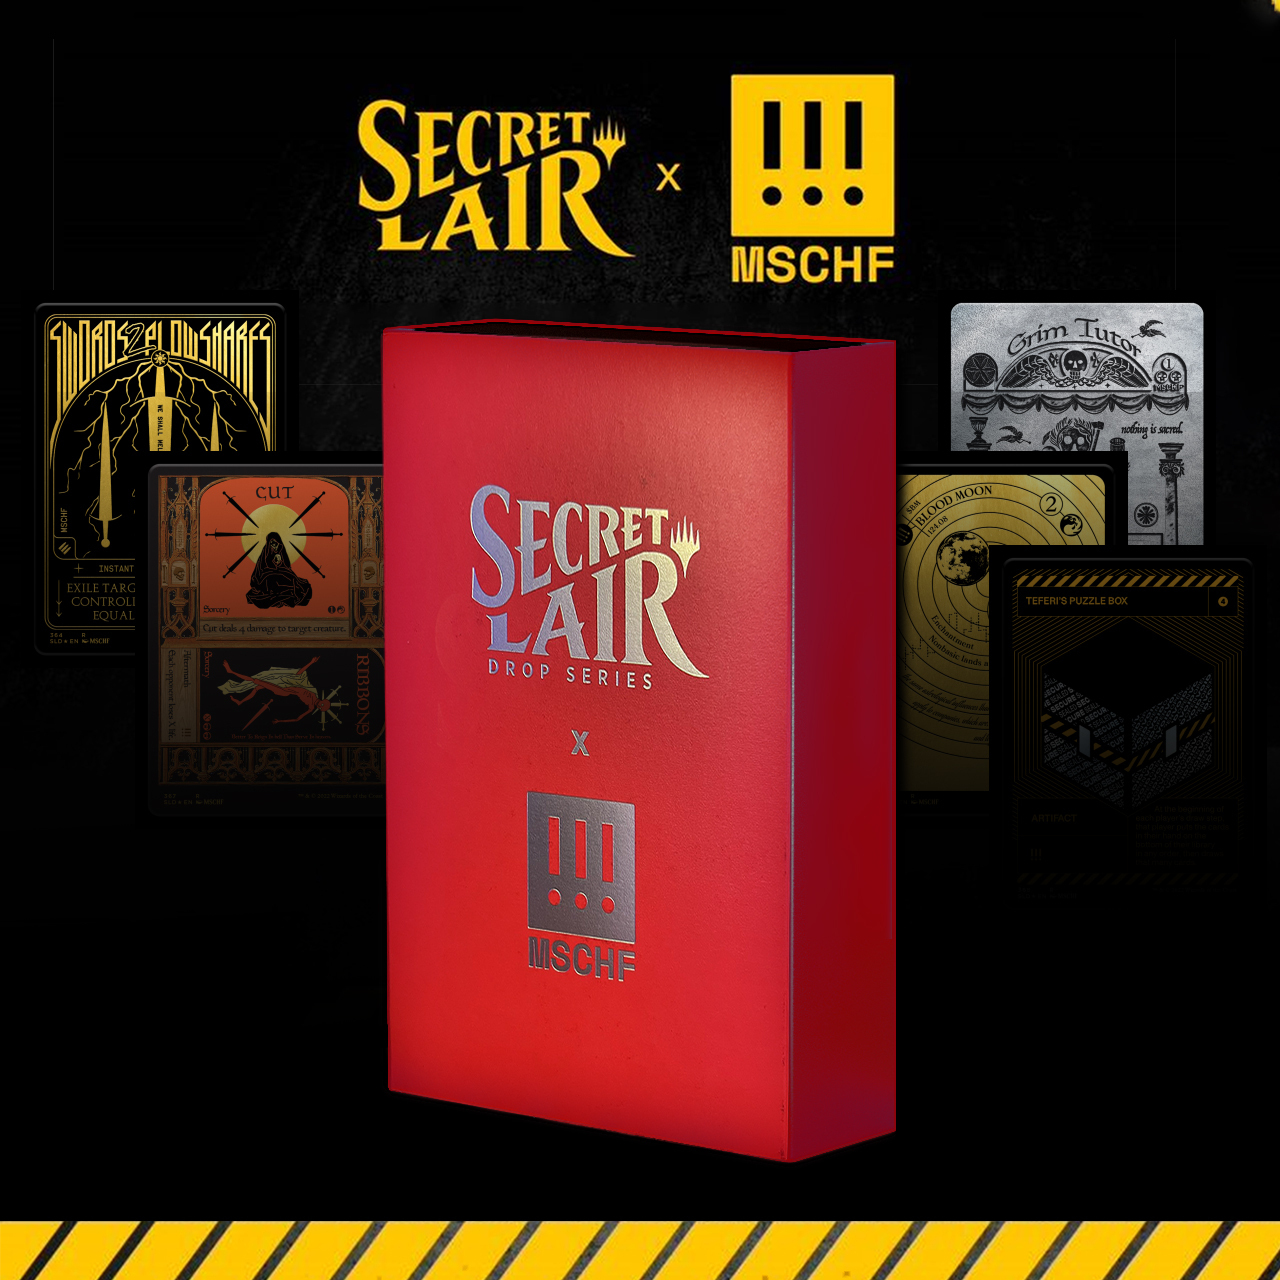 Secret Lair Drop Series: MSCHF